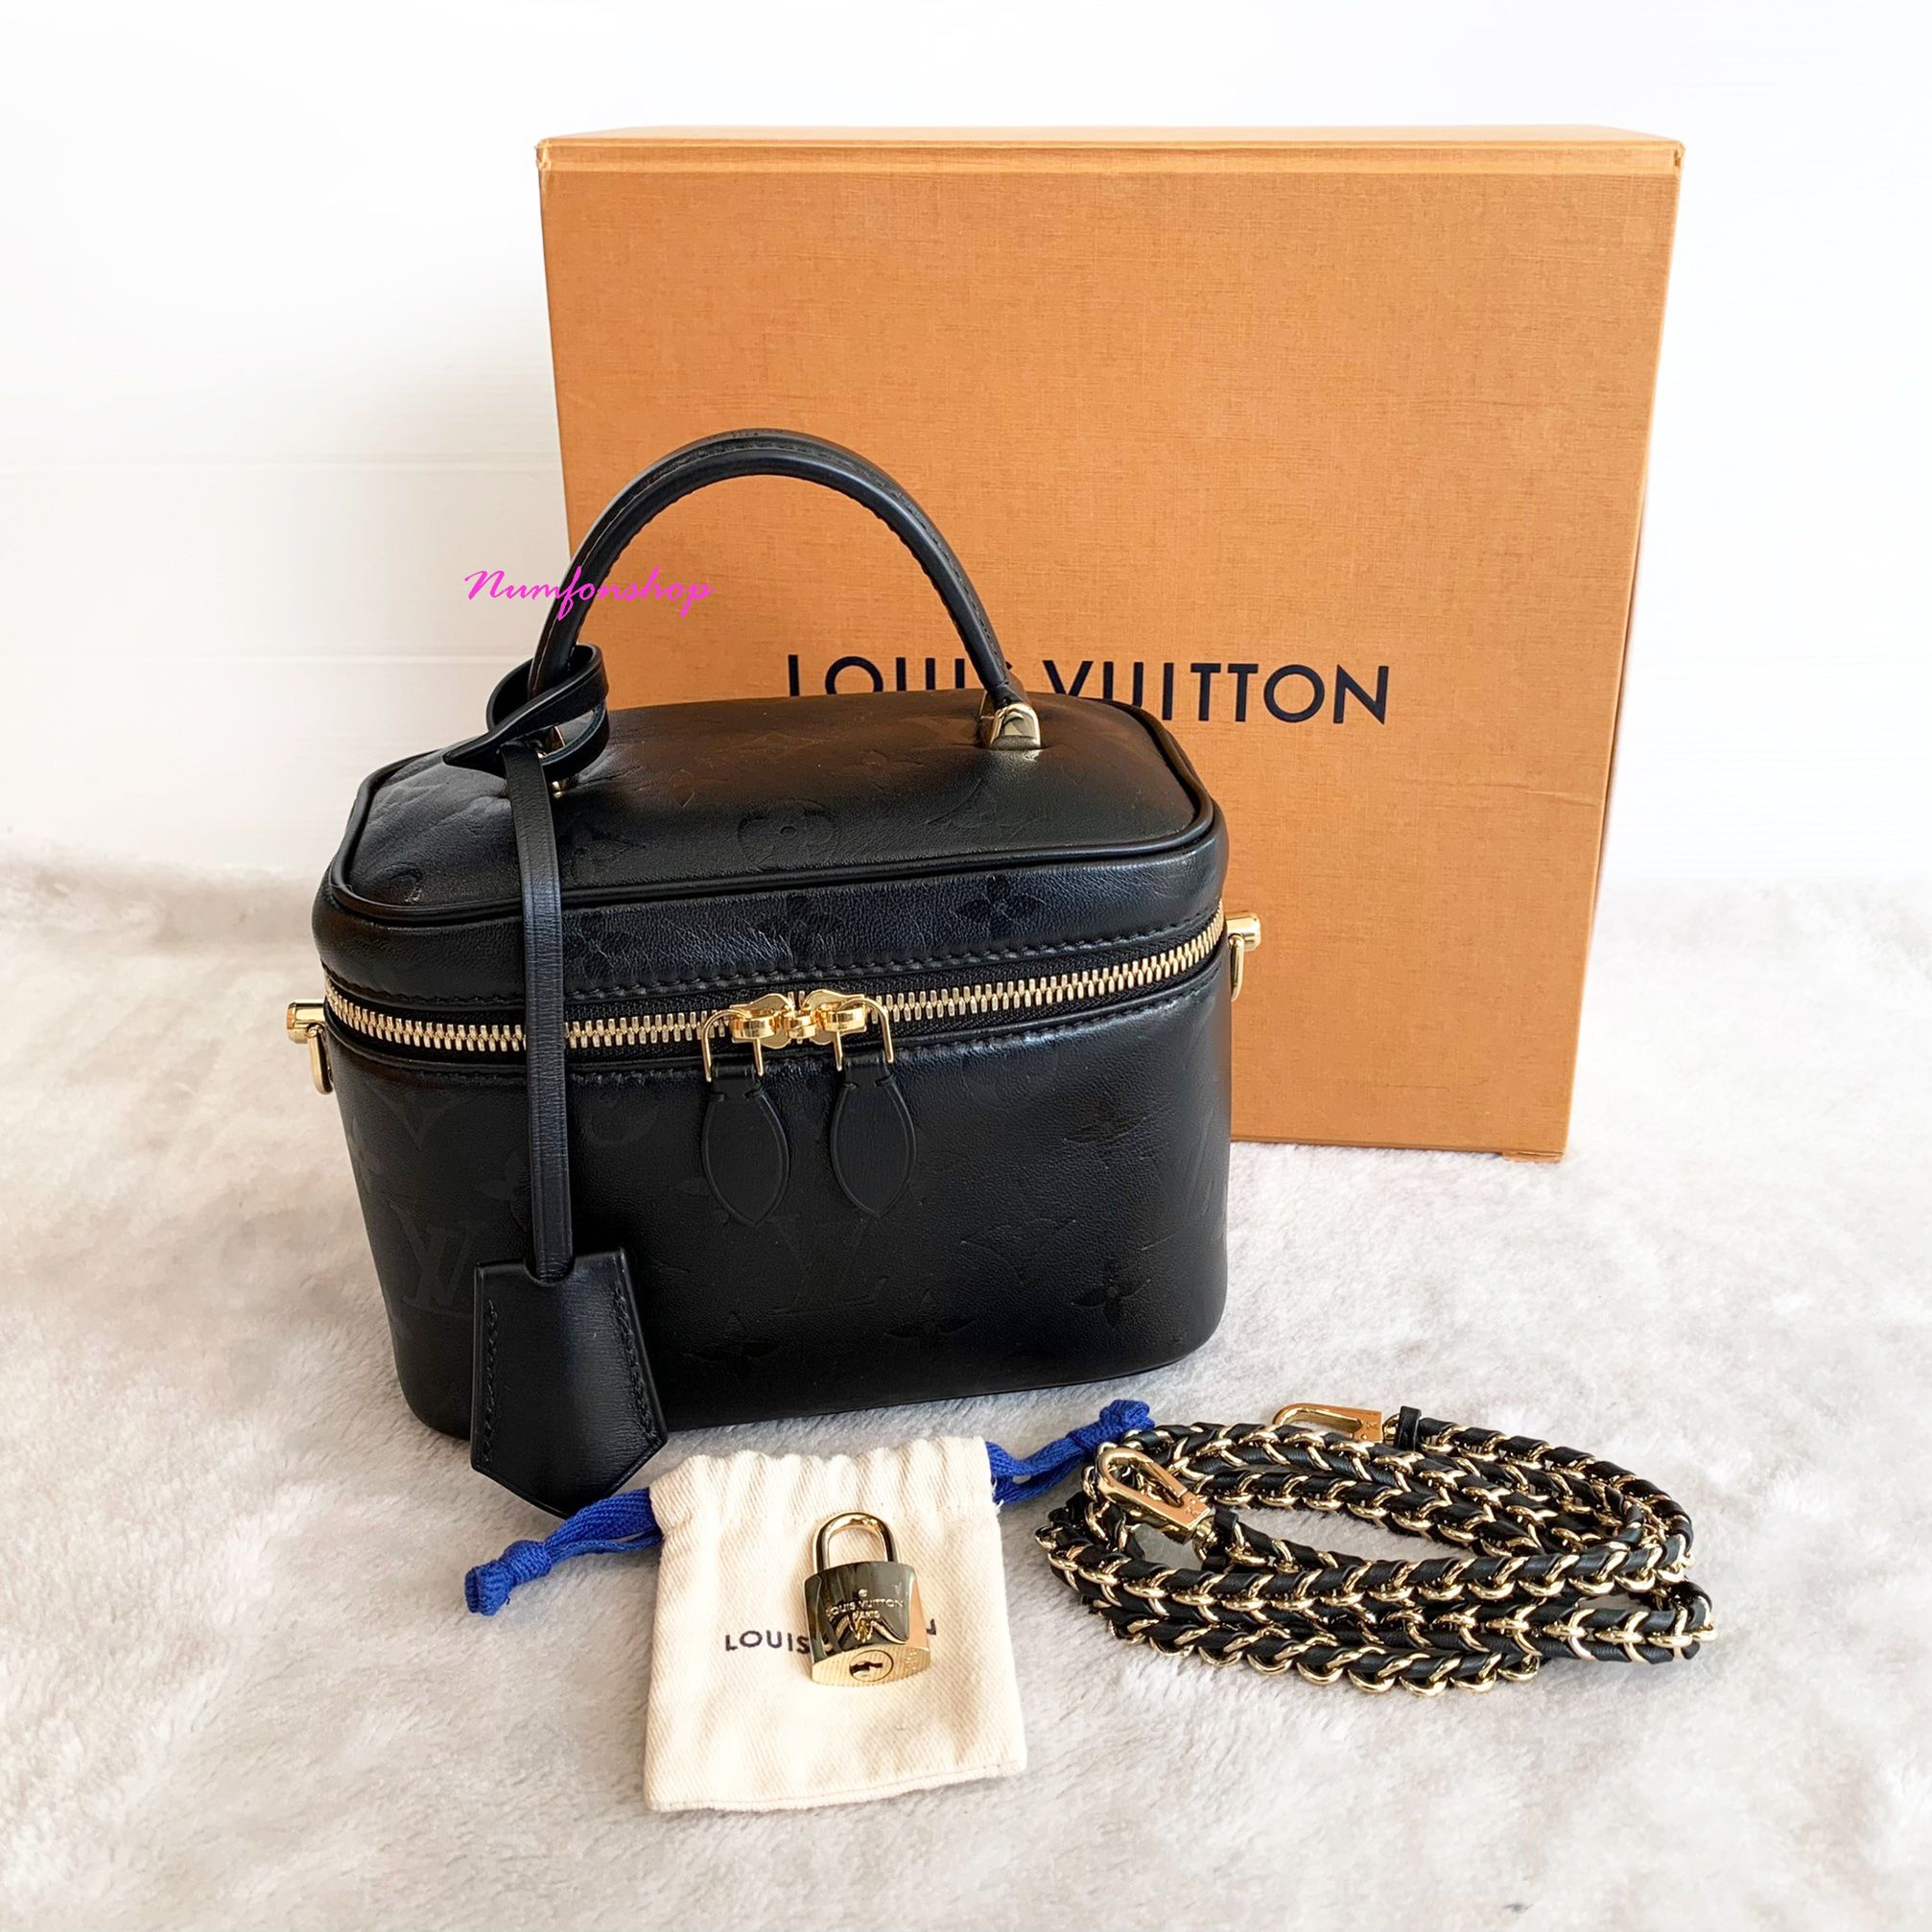 Sold Louis Vuitton Monogram Ink Vanity PM 2020 Used like new